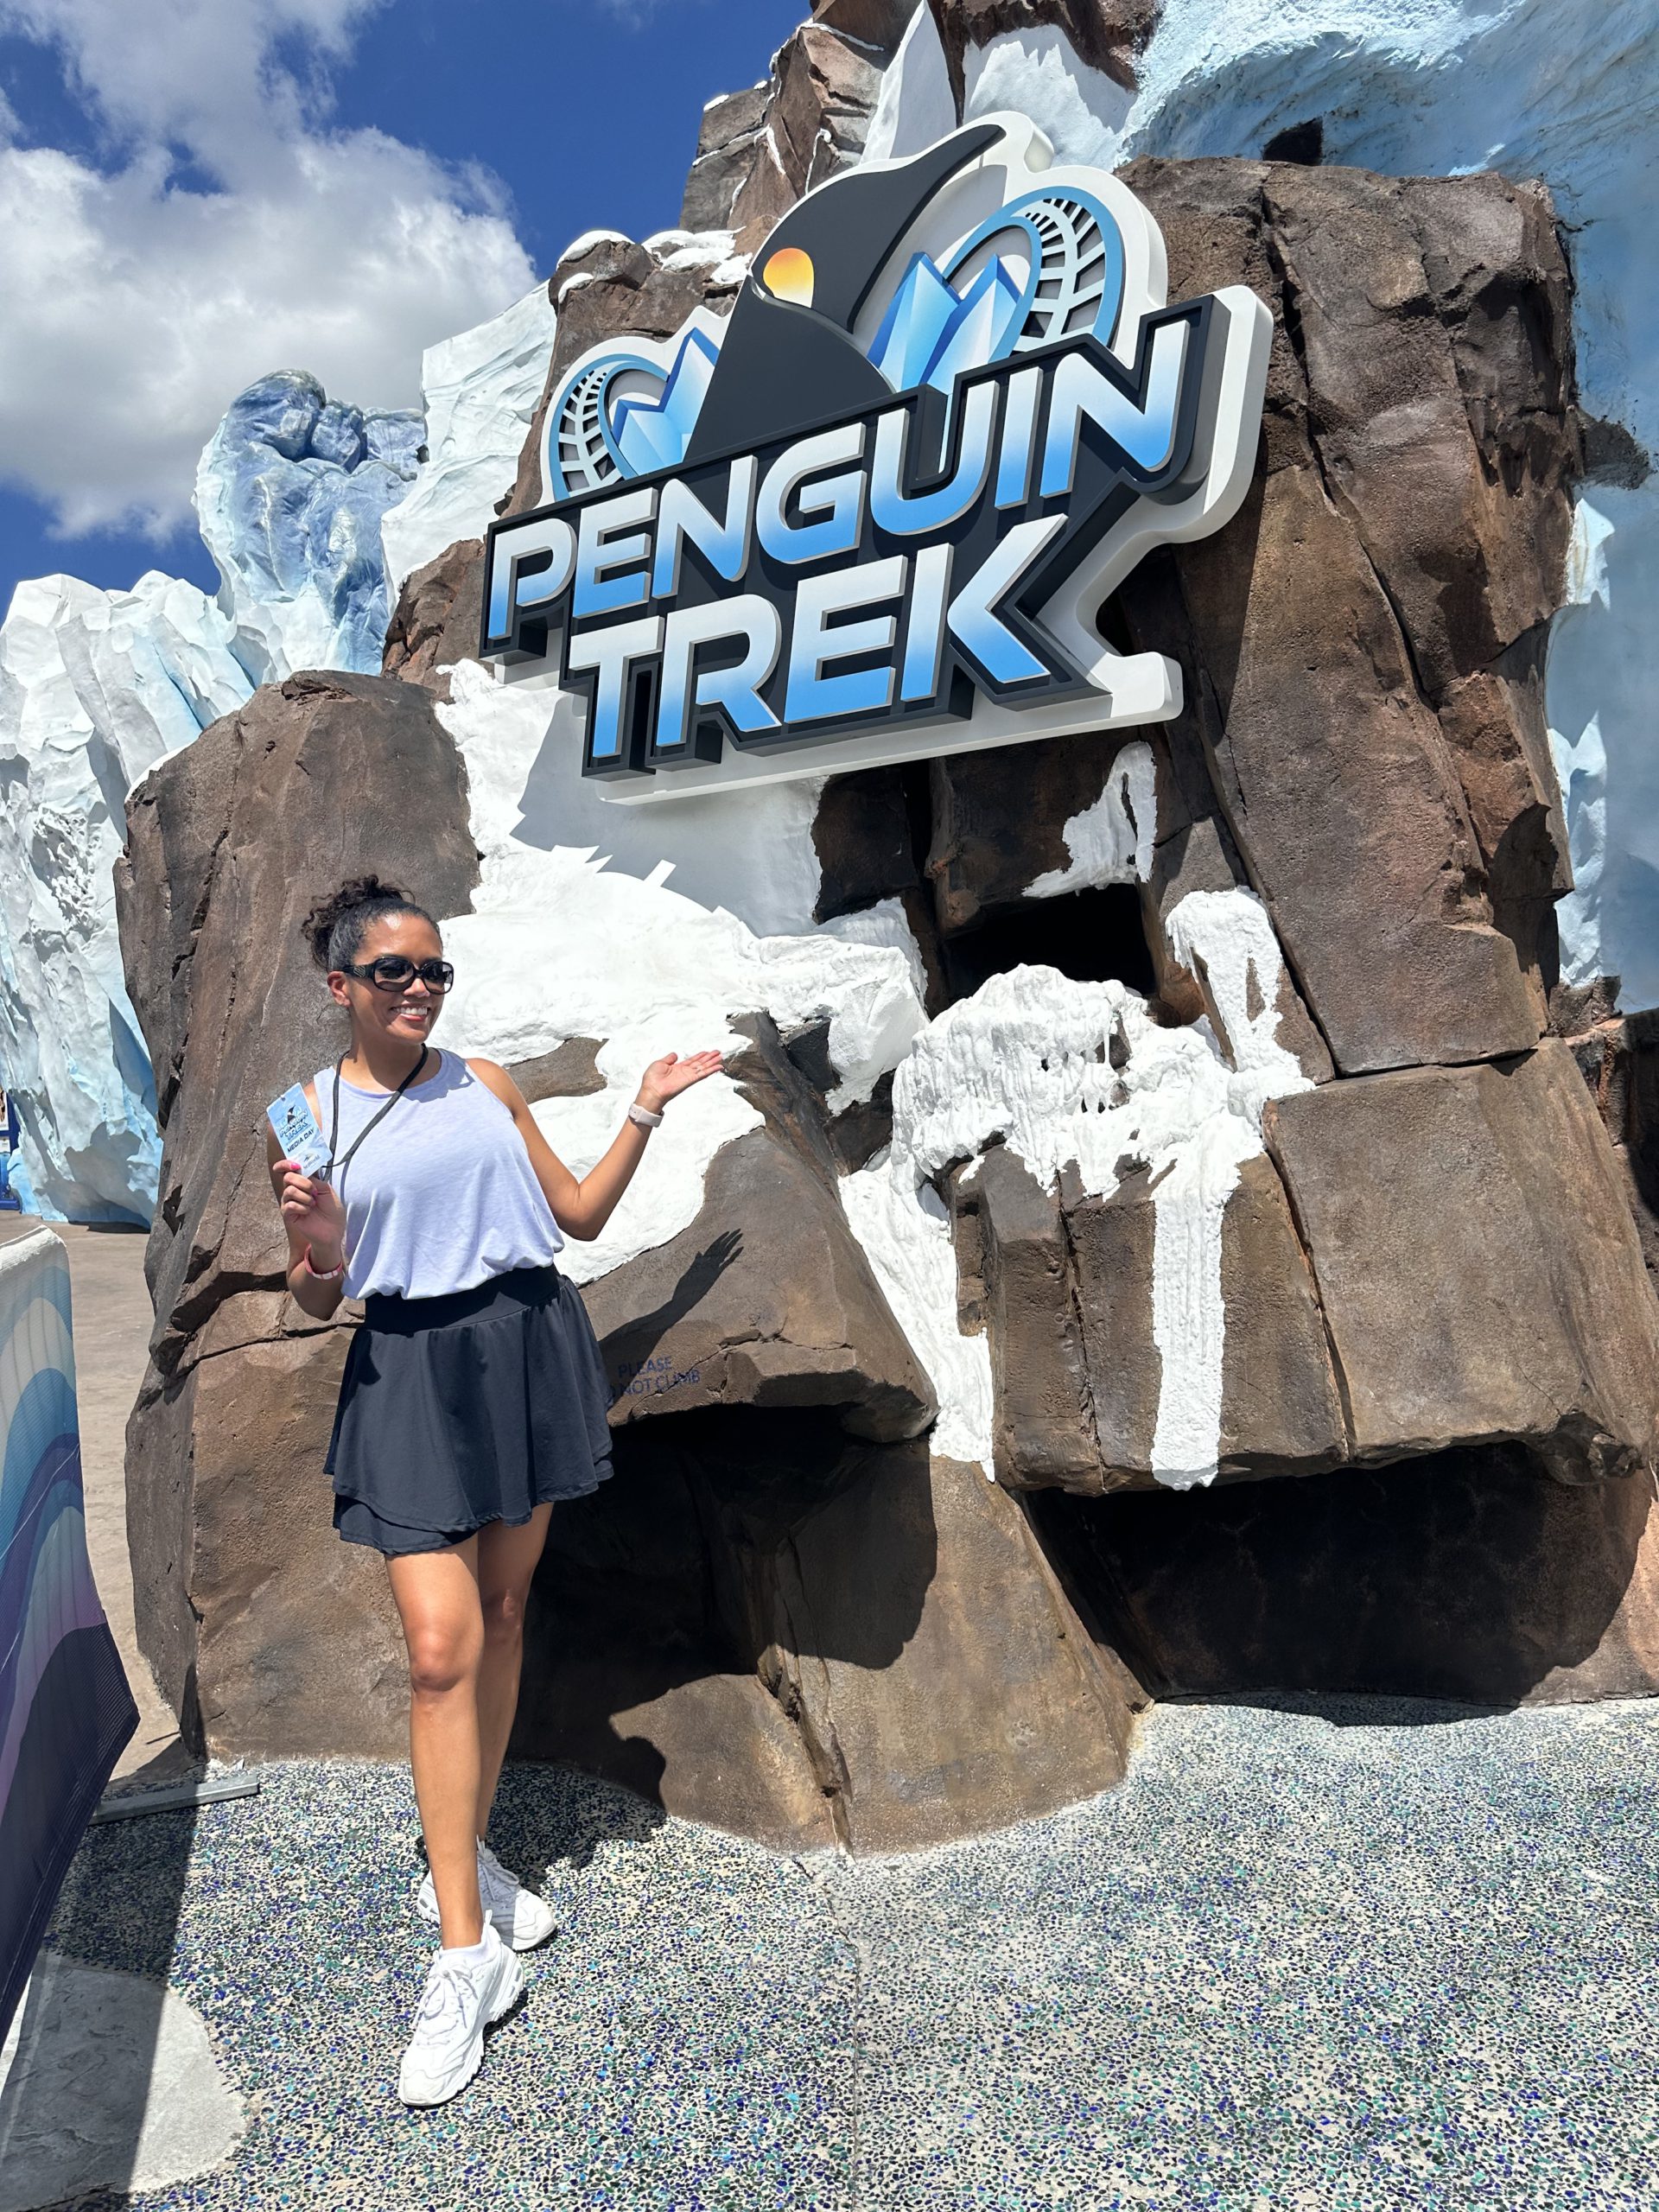 Dive into fun at SeaWorld Orlando with the New Penguin Trek Coaster